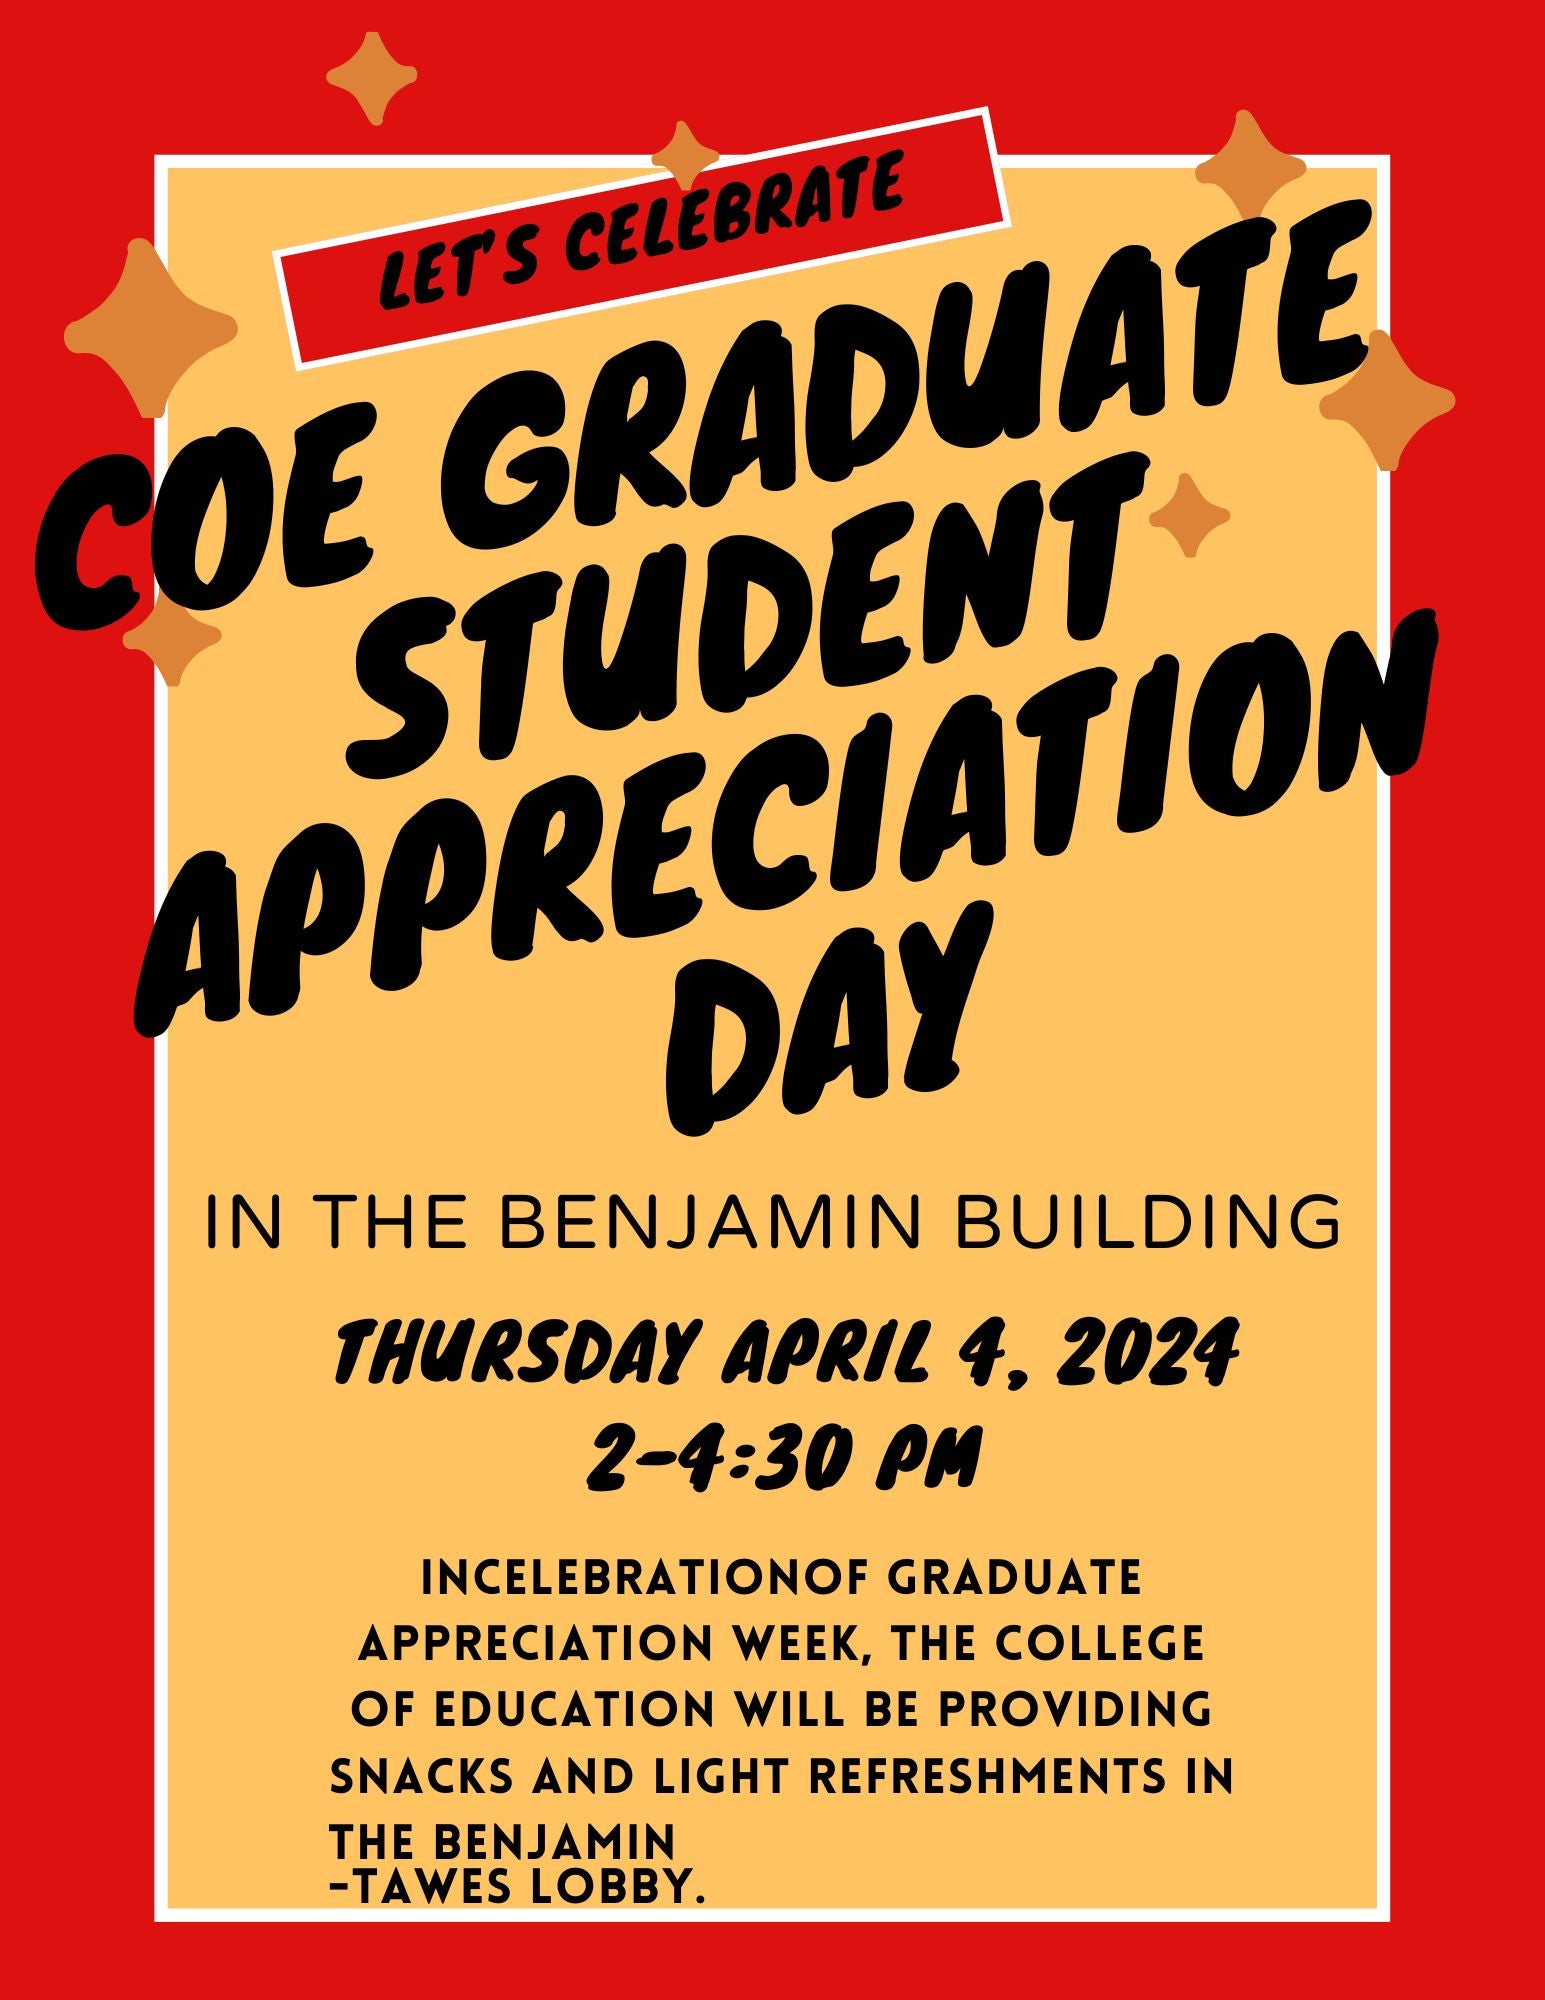 COE Grad Student Appreciation Day